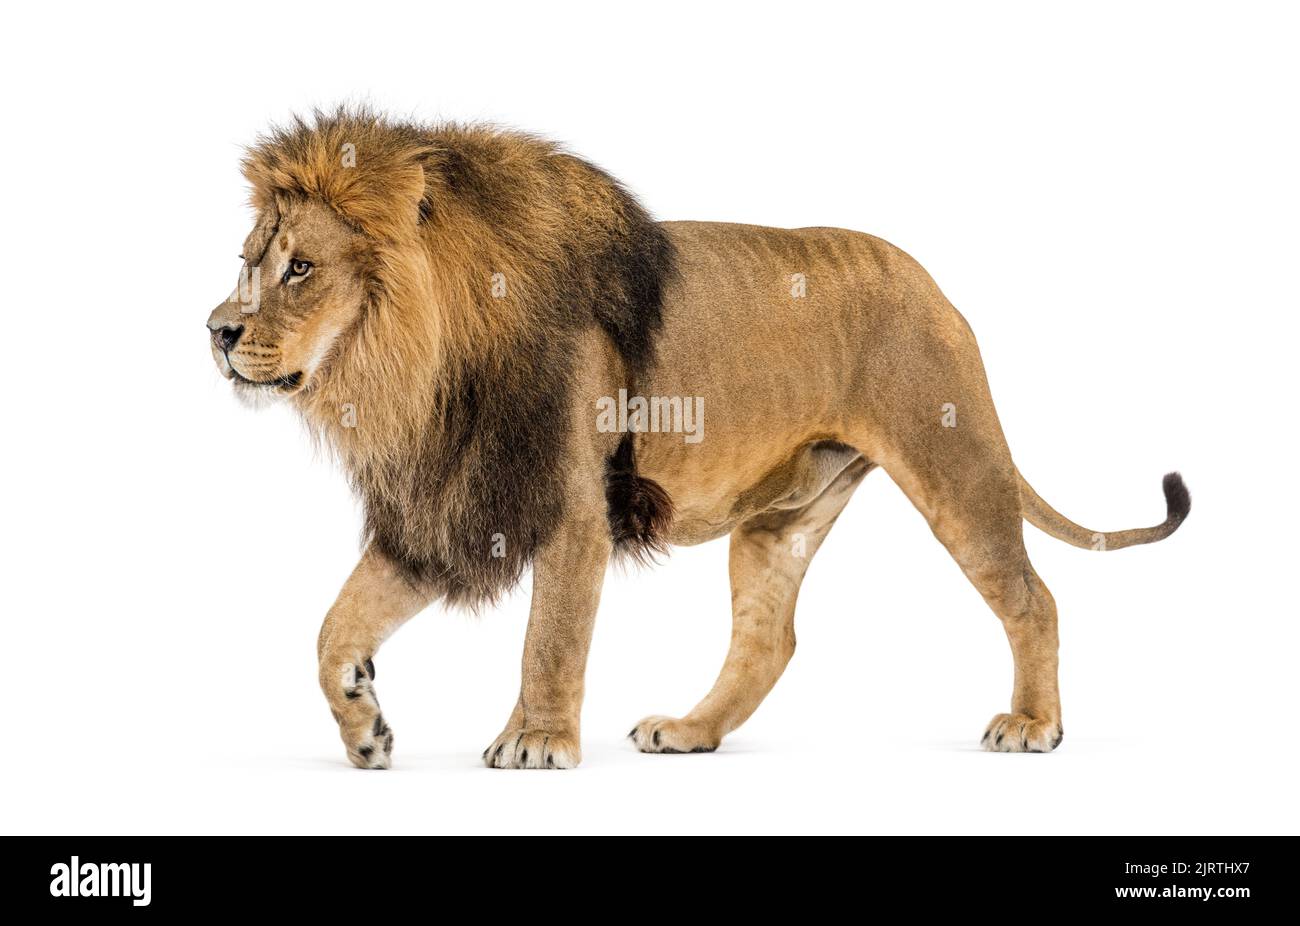 Vista lateral de un león caminando, aislado en blanco Foto de stock